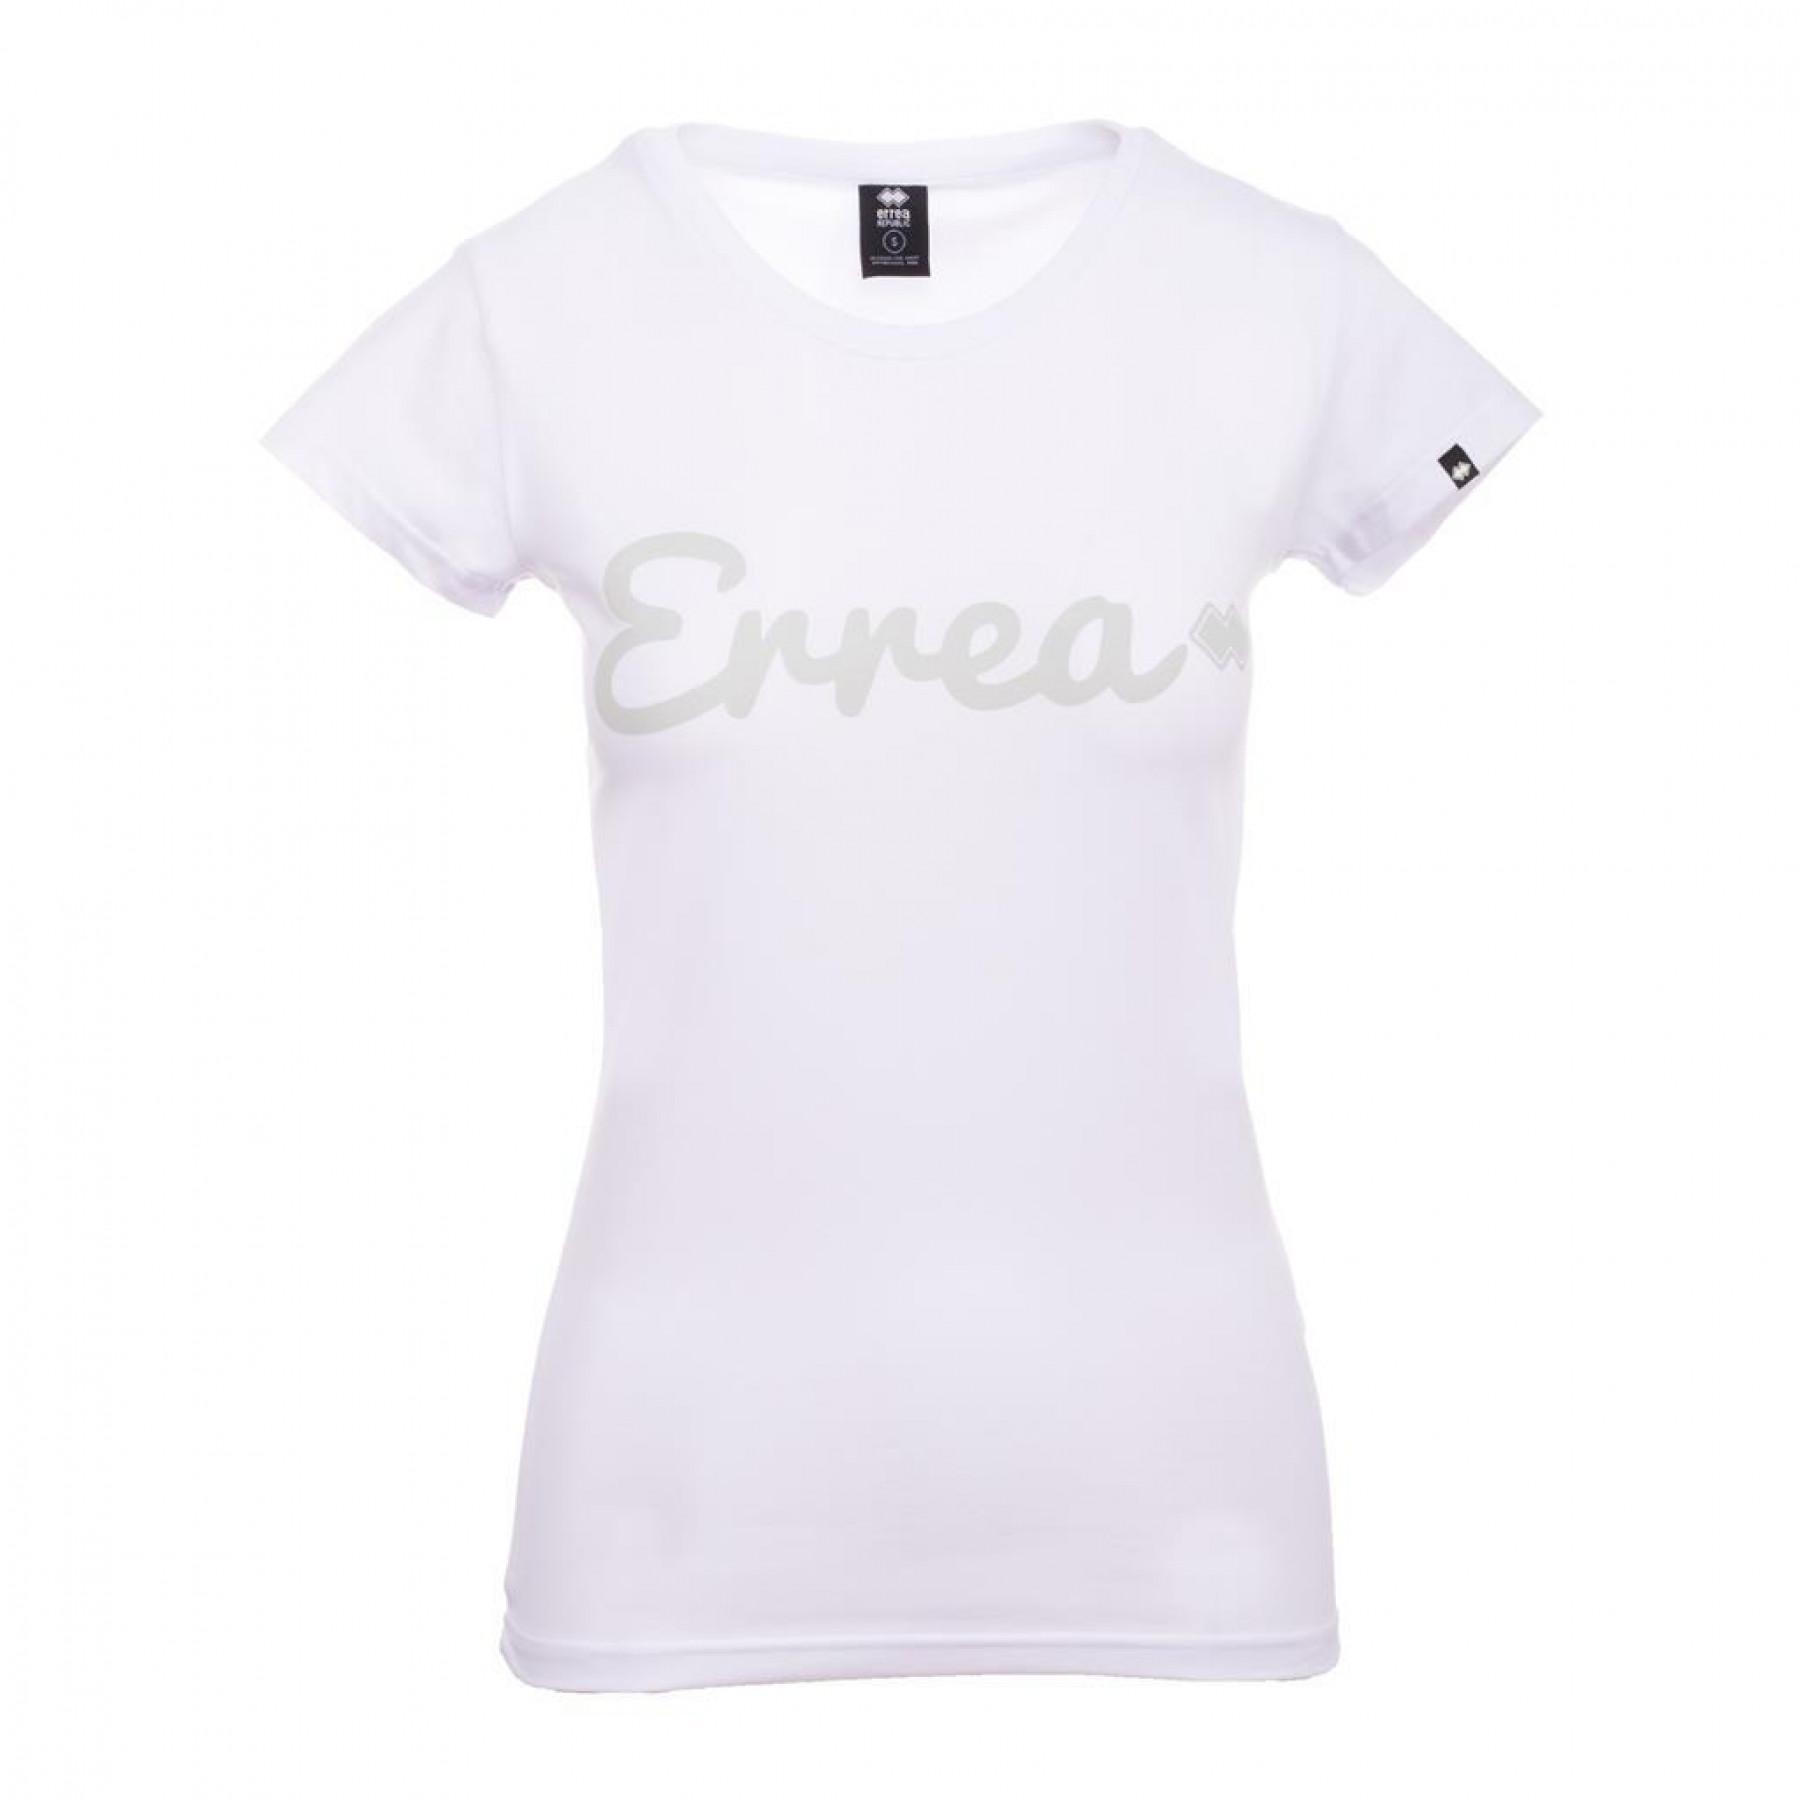 T-shirt donna Errea trend